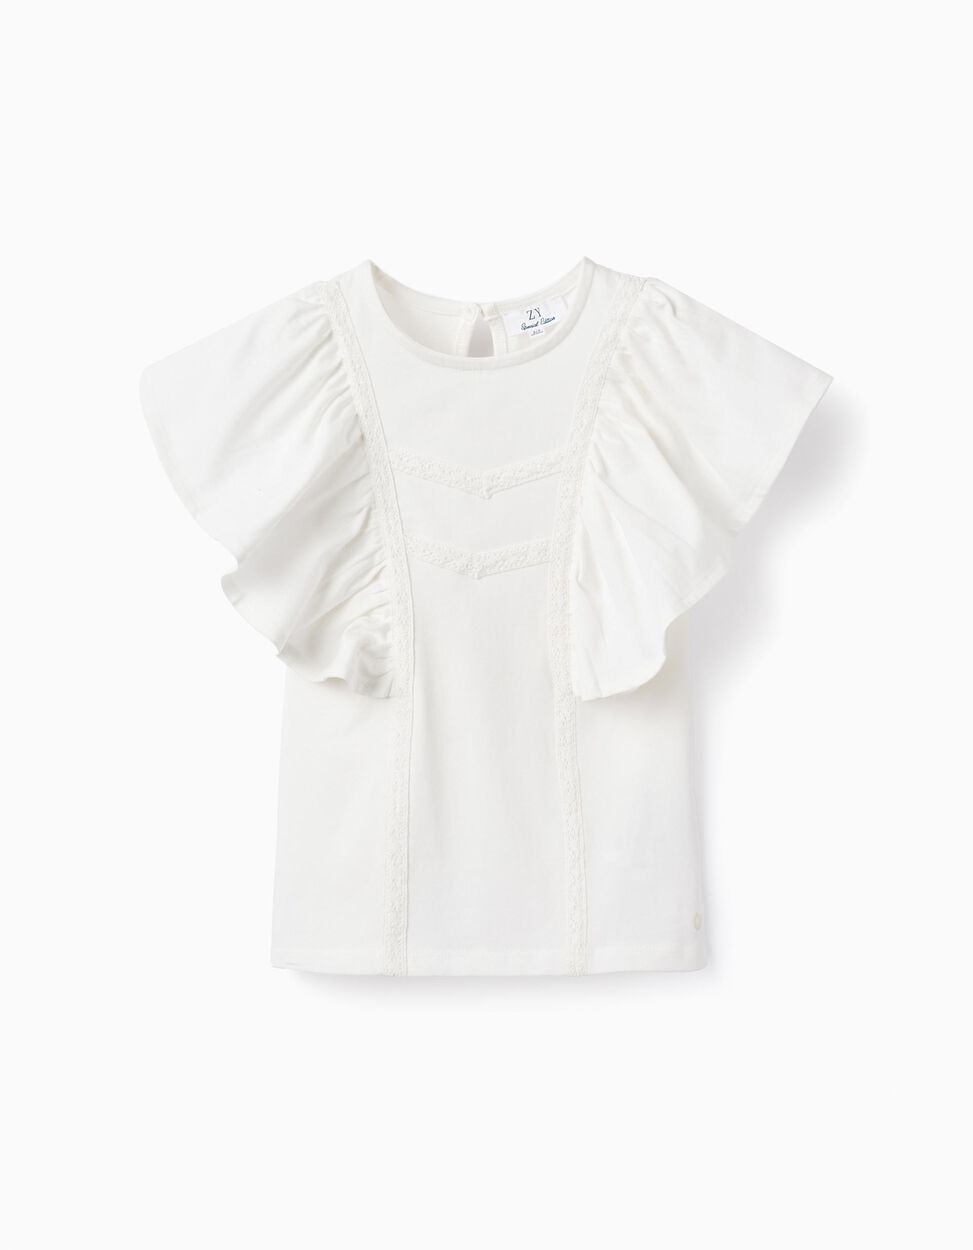 Acheter en ligne T-shirt avec Volants et Dentelle pour Fille 'B&S', Blanc